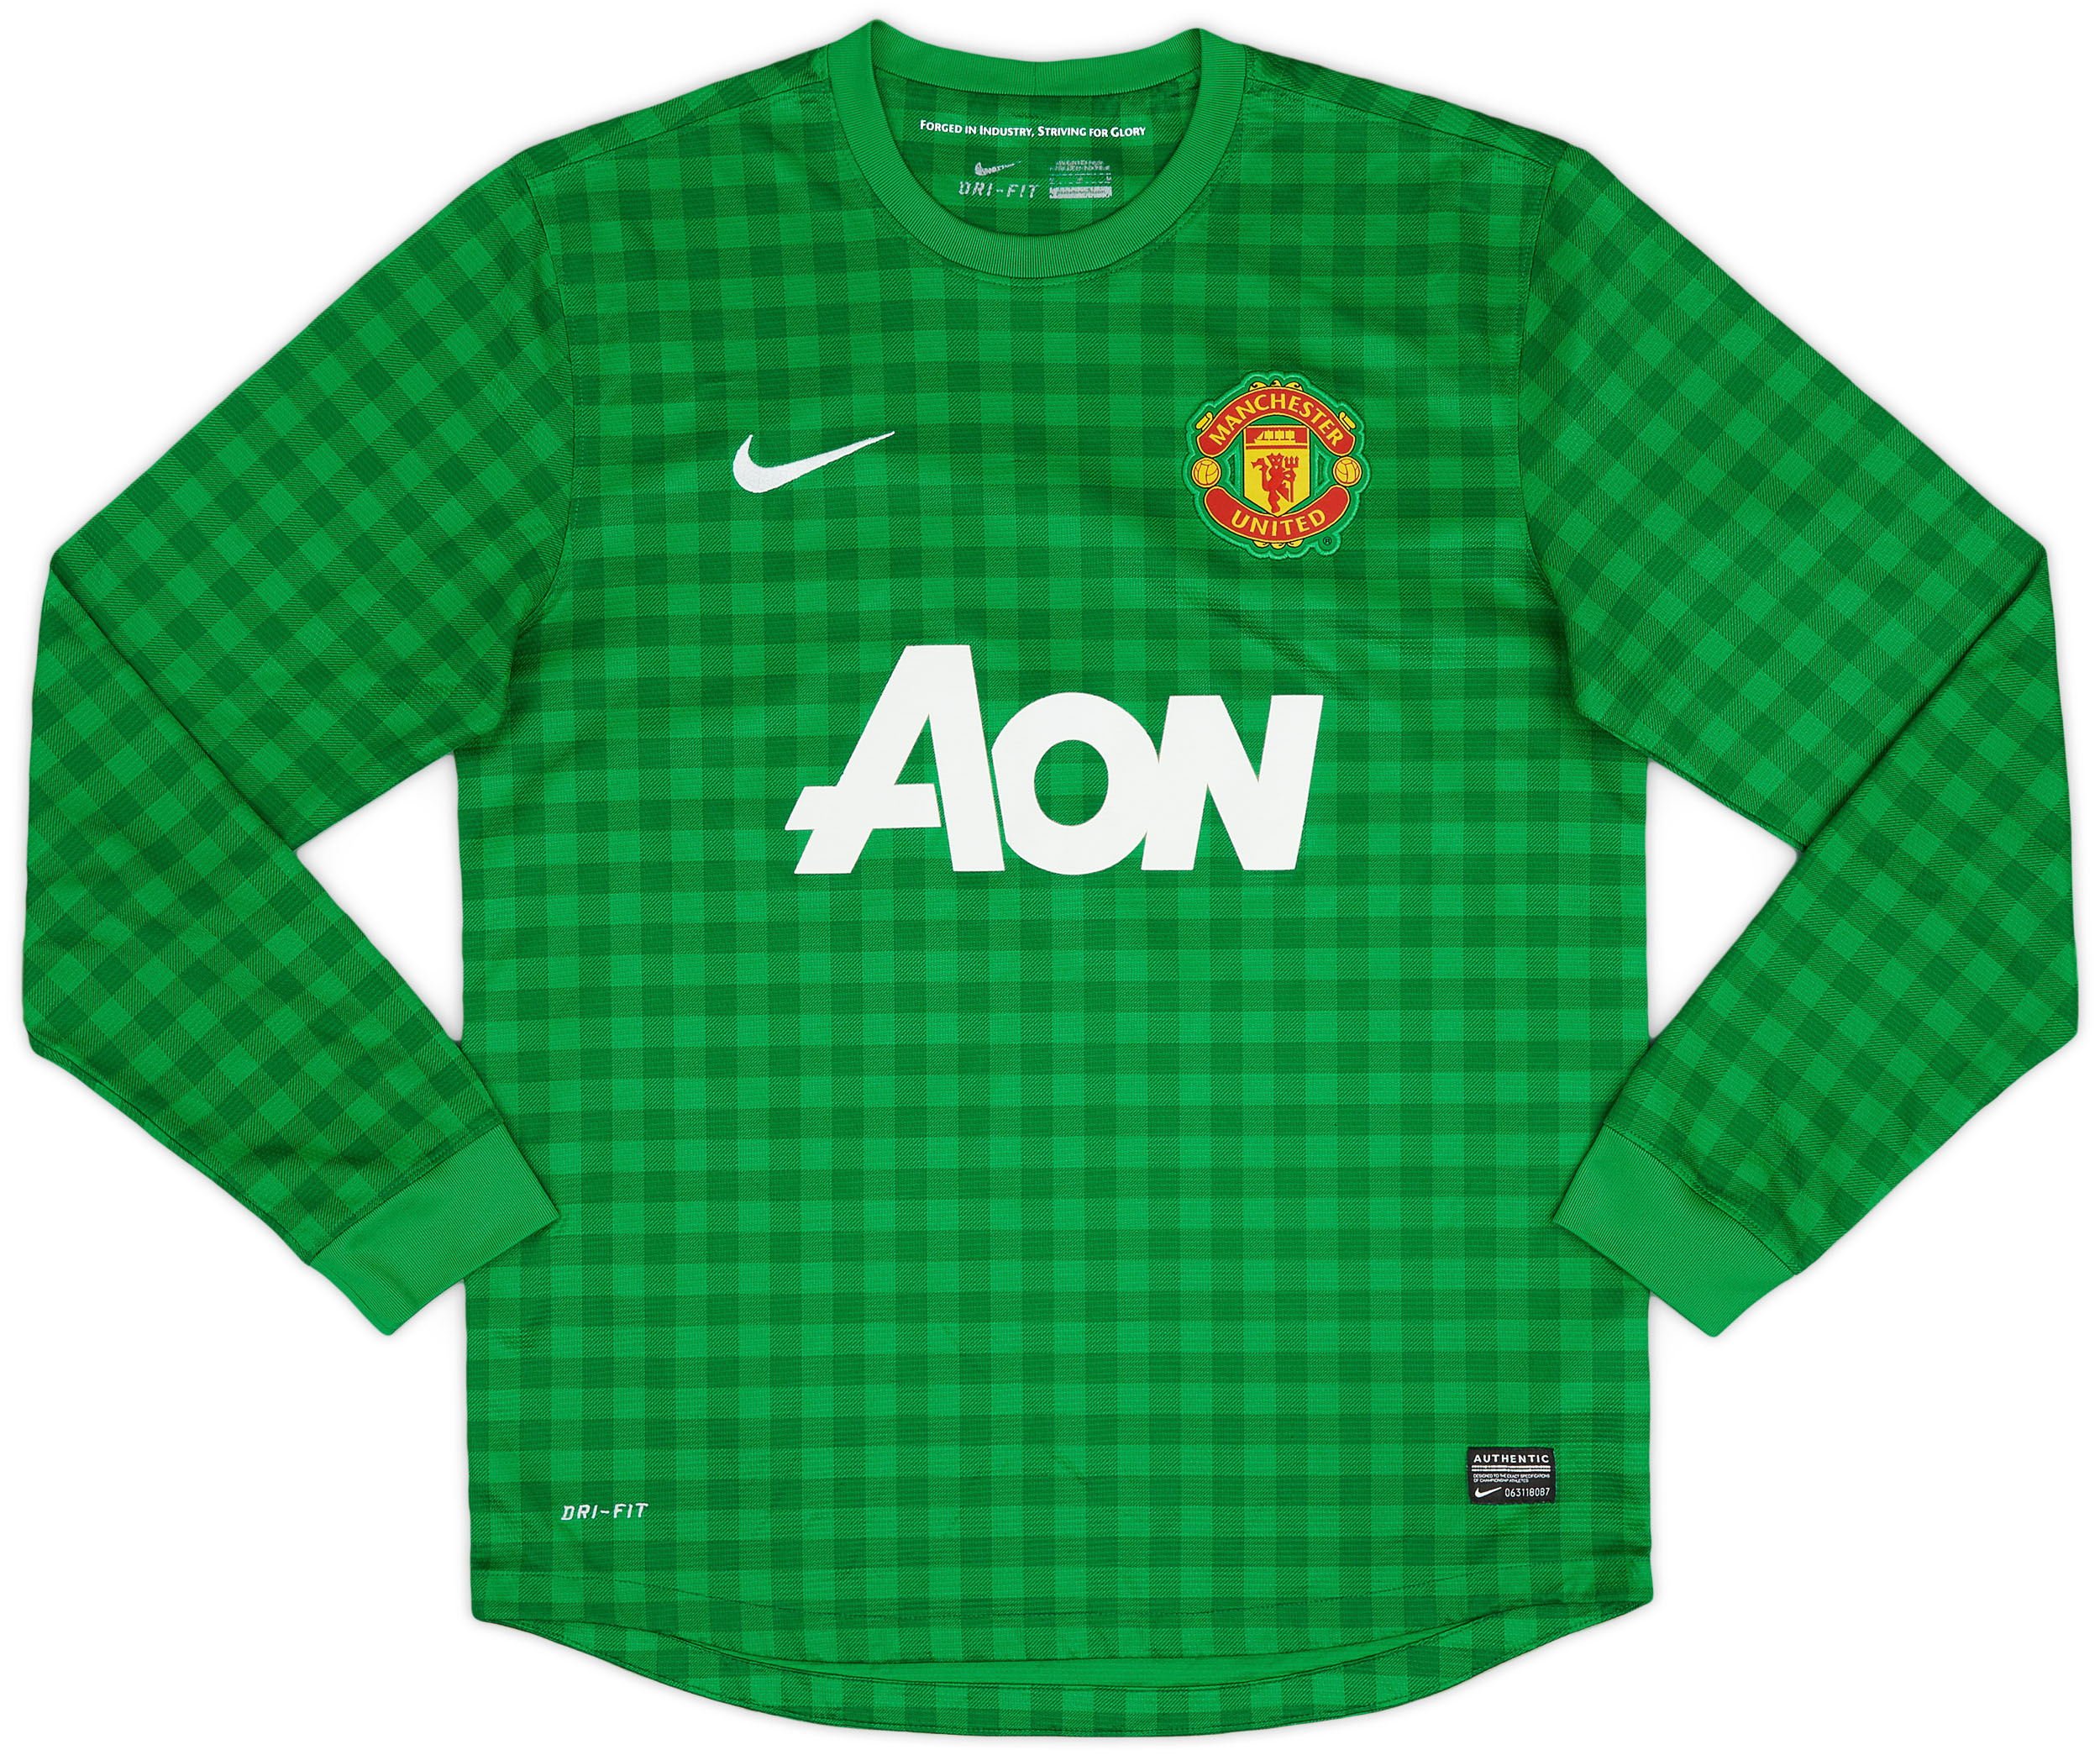 2012-13 Manchester United GK Shirt - 9/10 - ()